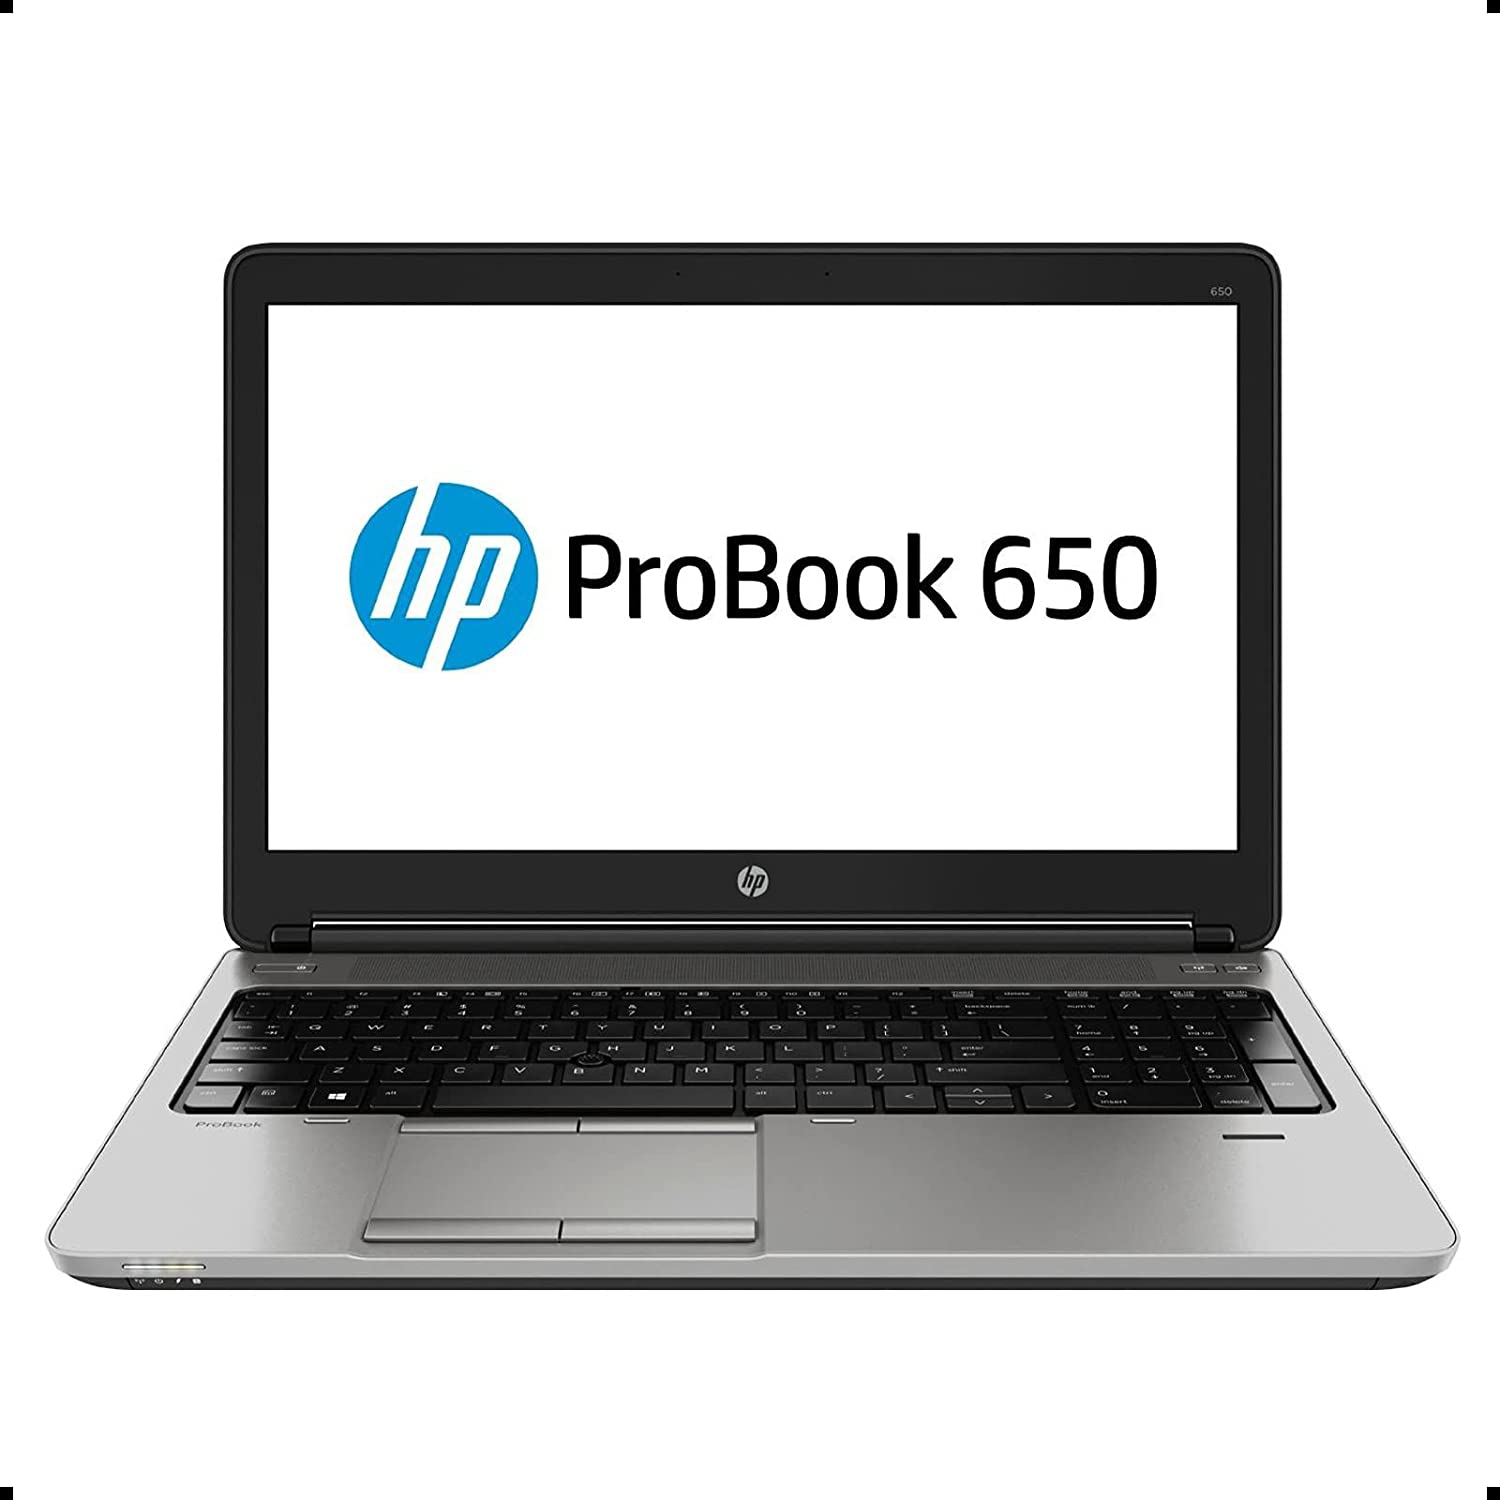 Refurbished (Good) - HP Probook 650 G1 Laptop: i5-4340M 2.9GHz, 8GB RAM, 180GB SSD, DVDRW, Webcam, 15.6" HD Screen, Windows 11 Pro "â€œ